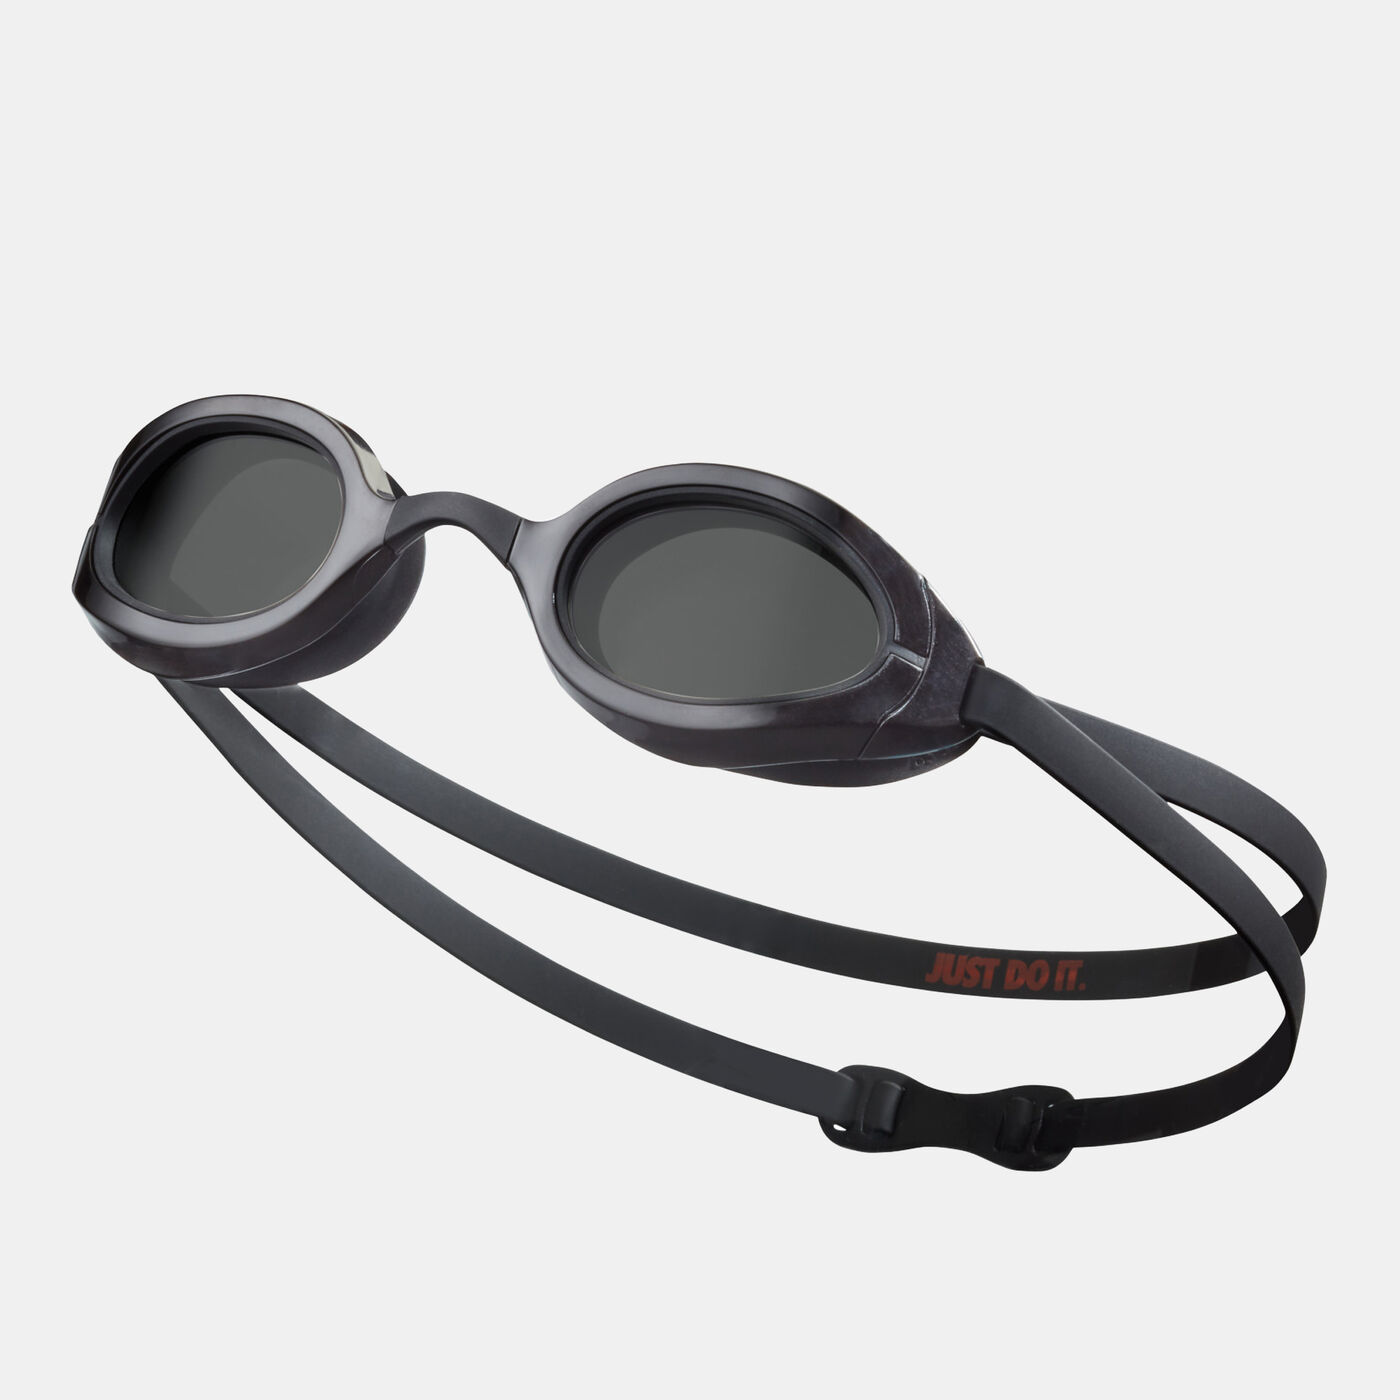 Vapor Photochromic Swimming Goggles